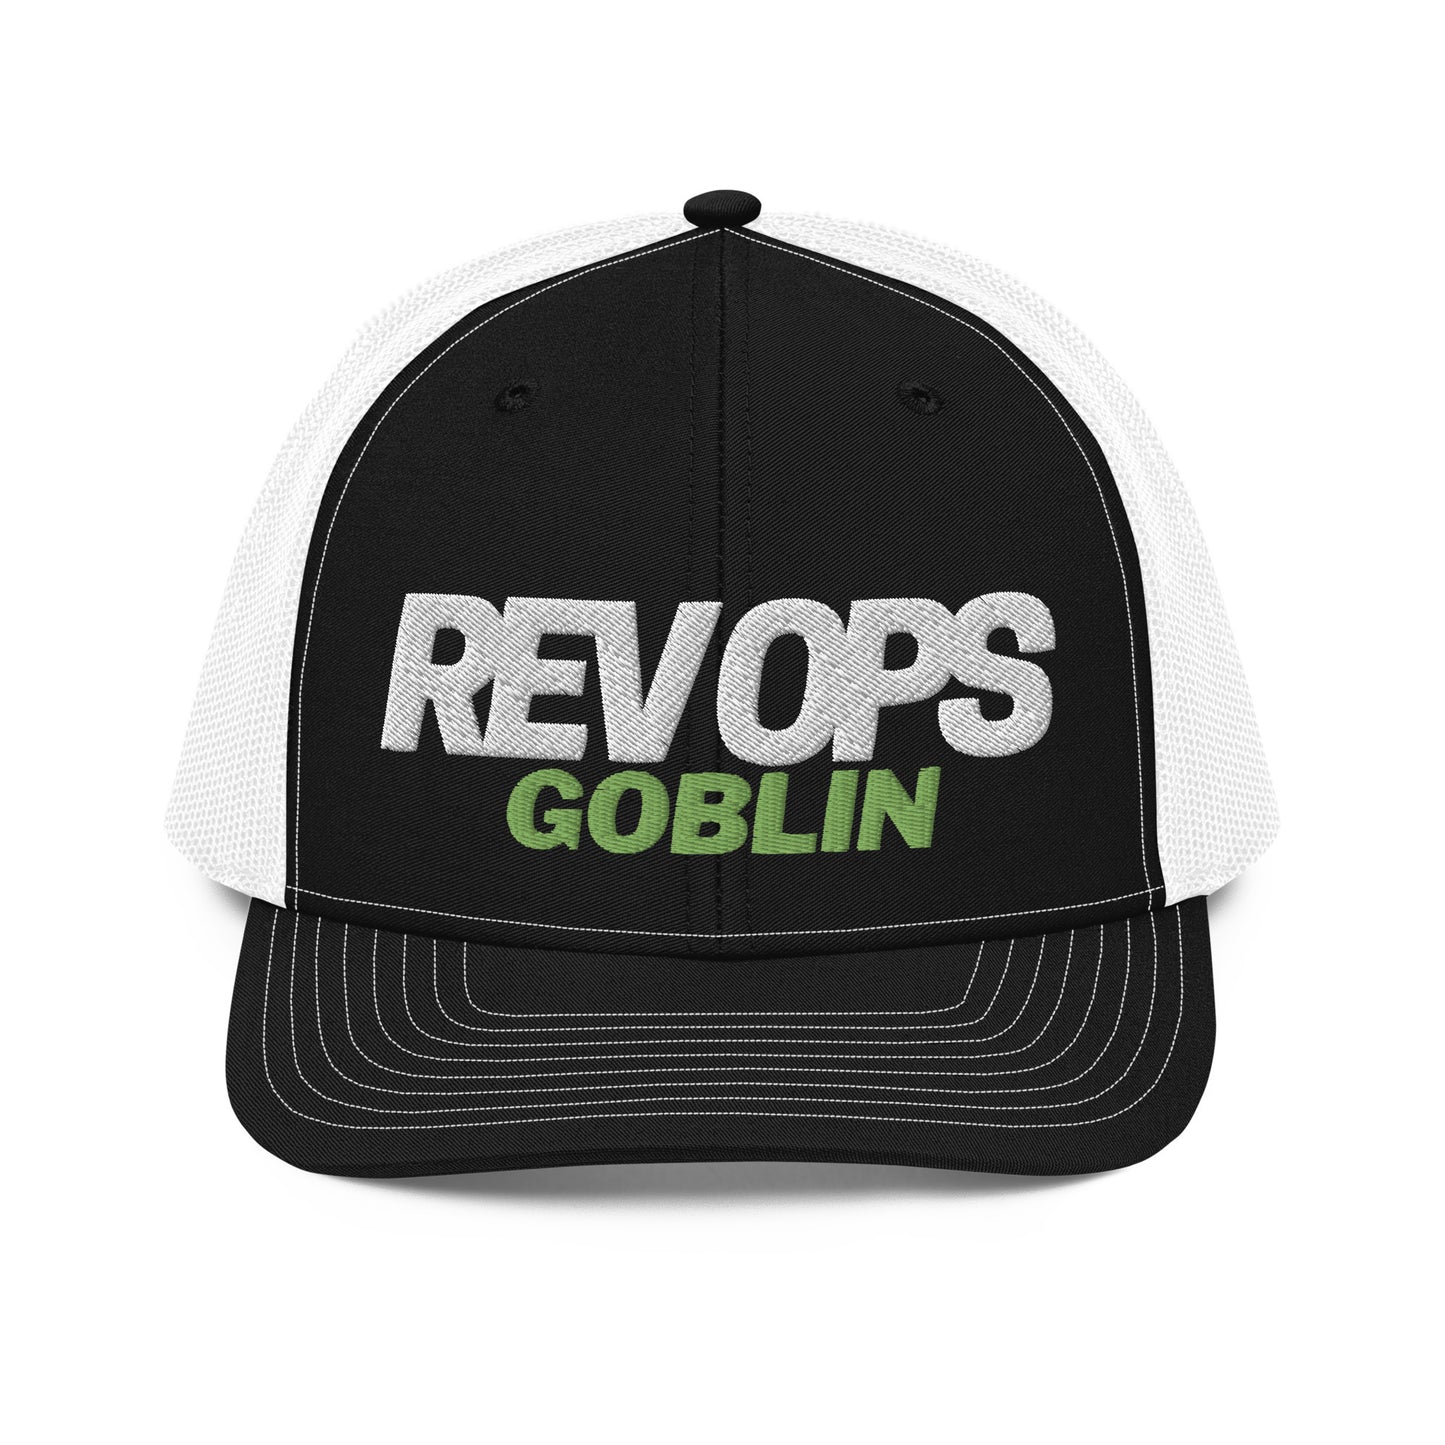 Rev Ops Goblin Mesh Trucker Cap